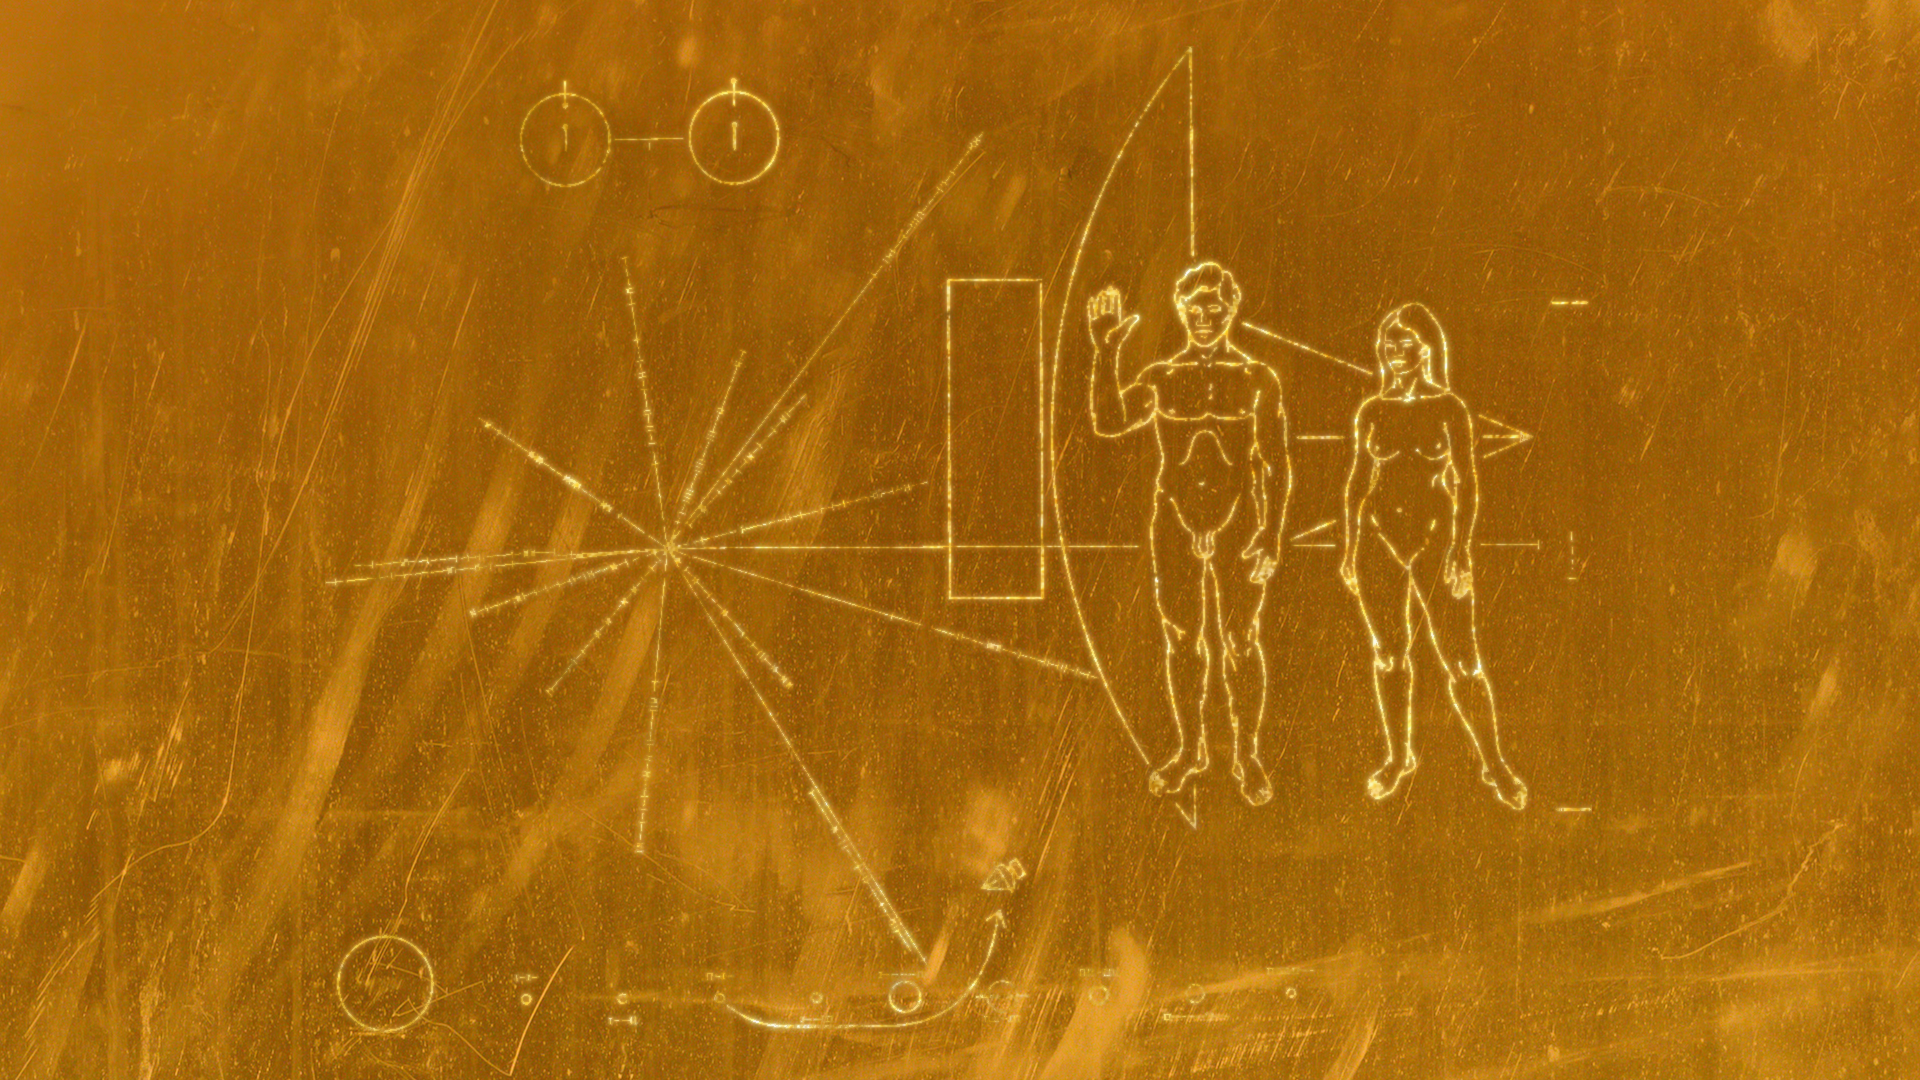 General 1920x1080 Voyager Voyager Golden Record artwork gold men women NASA space